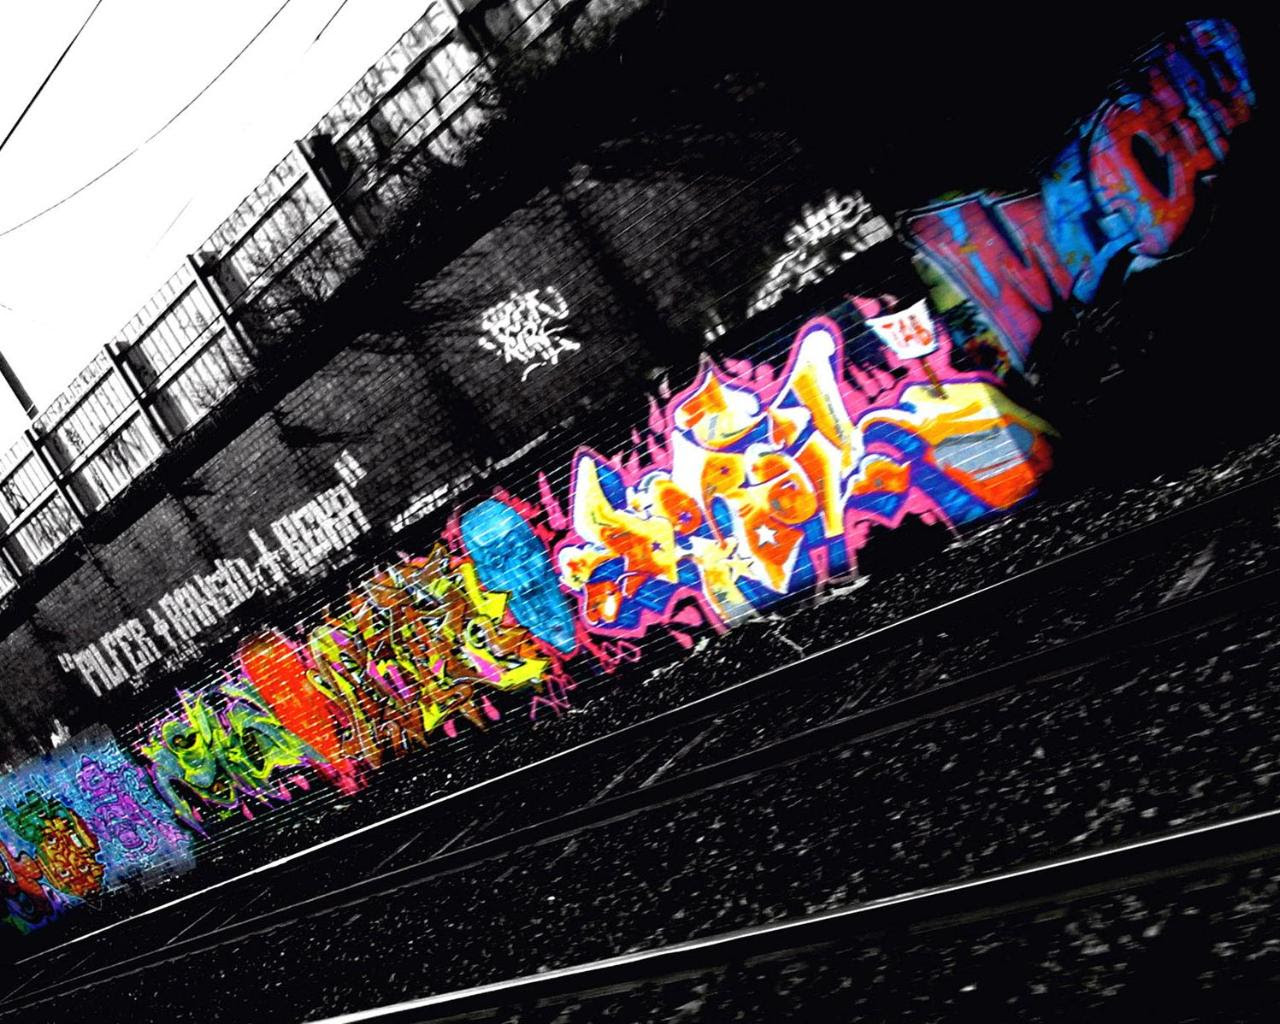  Gambar  Grafiti Casper  Sobgrafiti